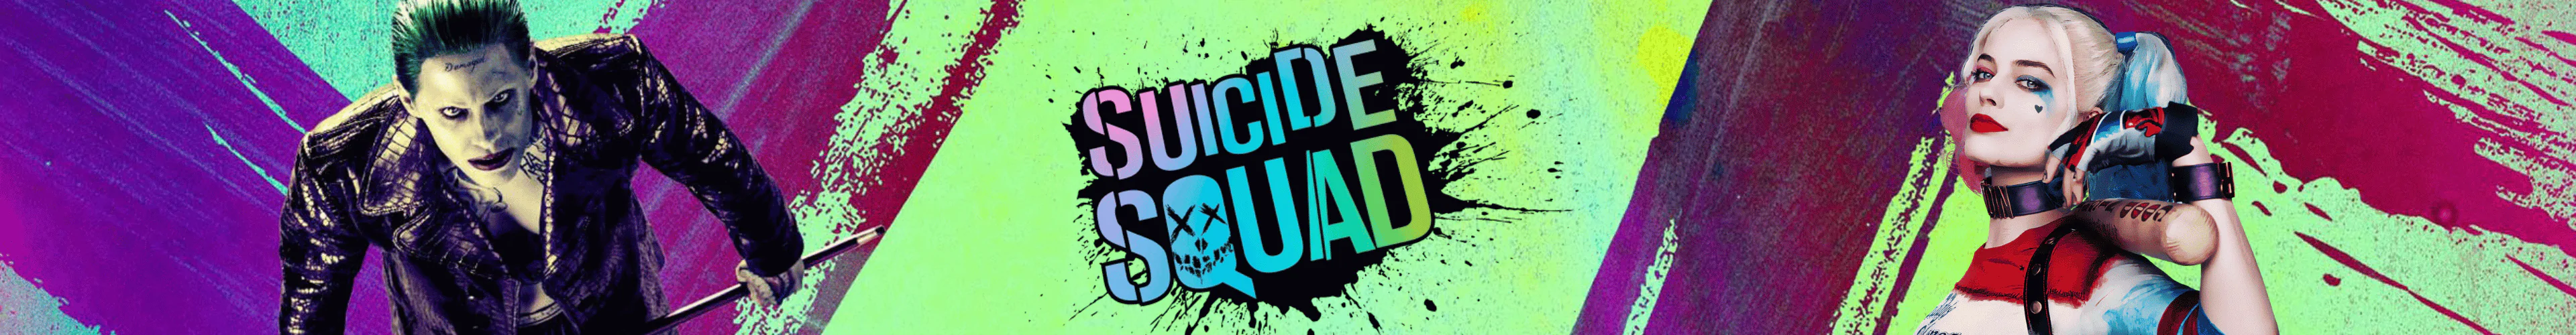 Suicide Squad figures banner